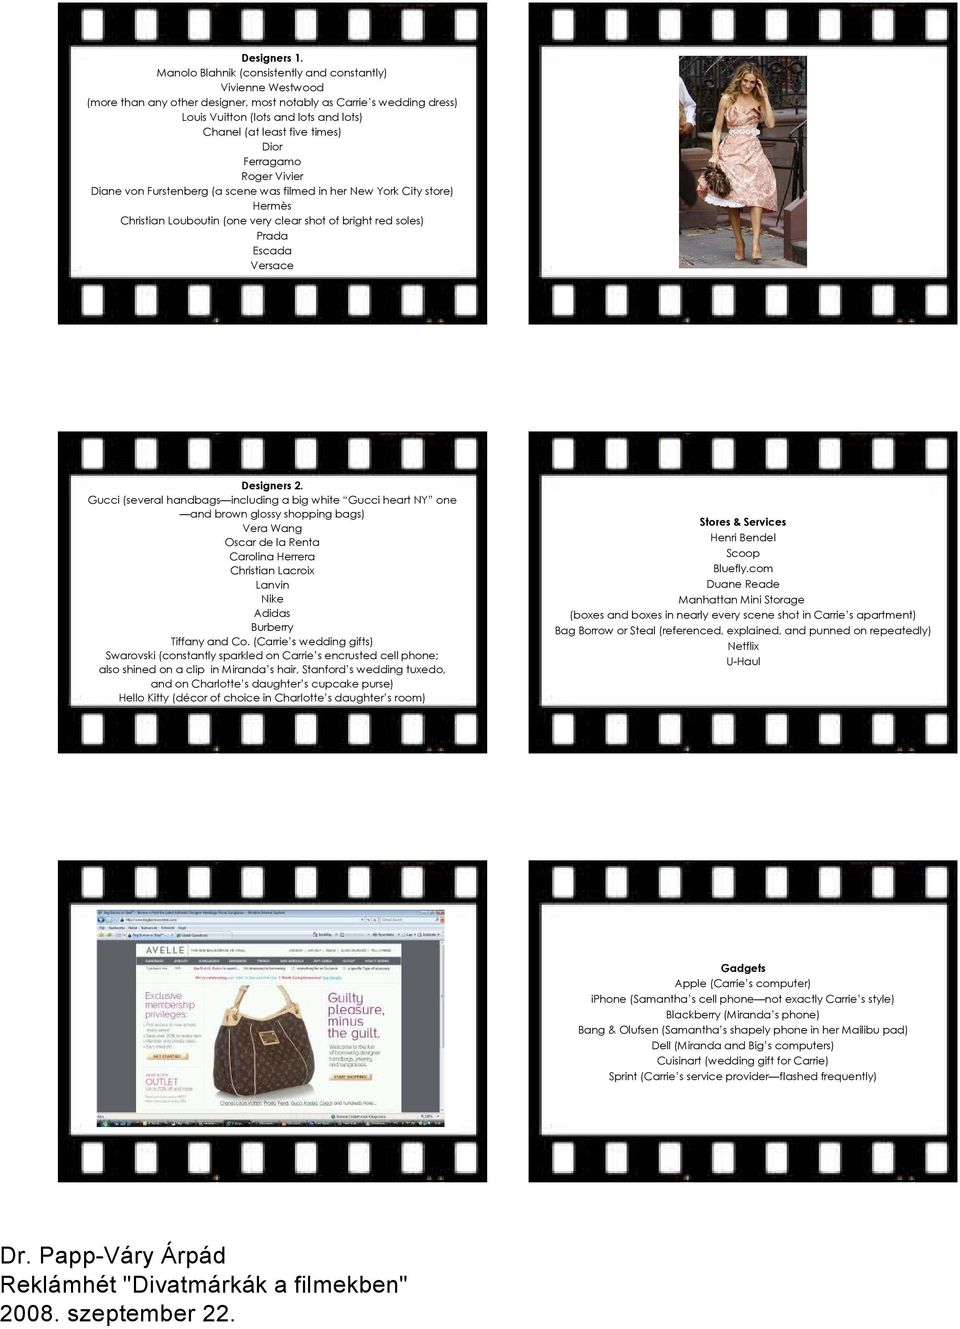 times) Dior Ferragamo Roger Vivier Diane von Furstenberg (a scene was filmed in her New York City store) Hermès Christian Louboutin (one very clear shot of bright red soles) Prada Escada Versace